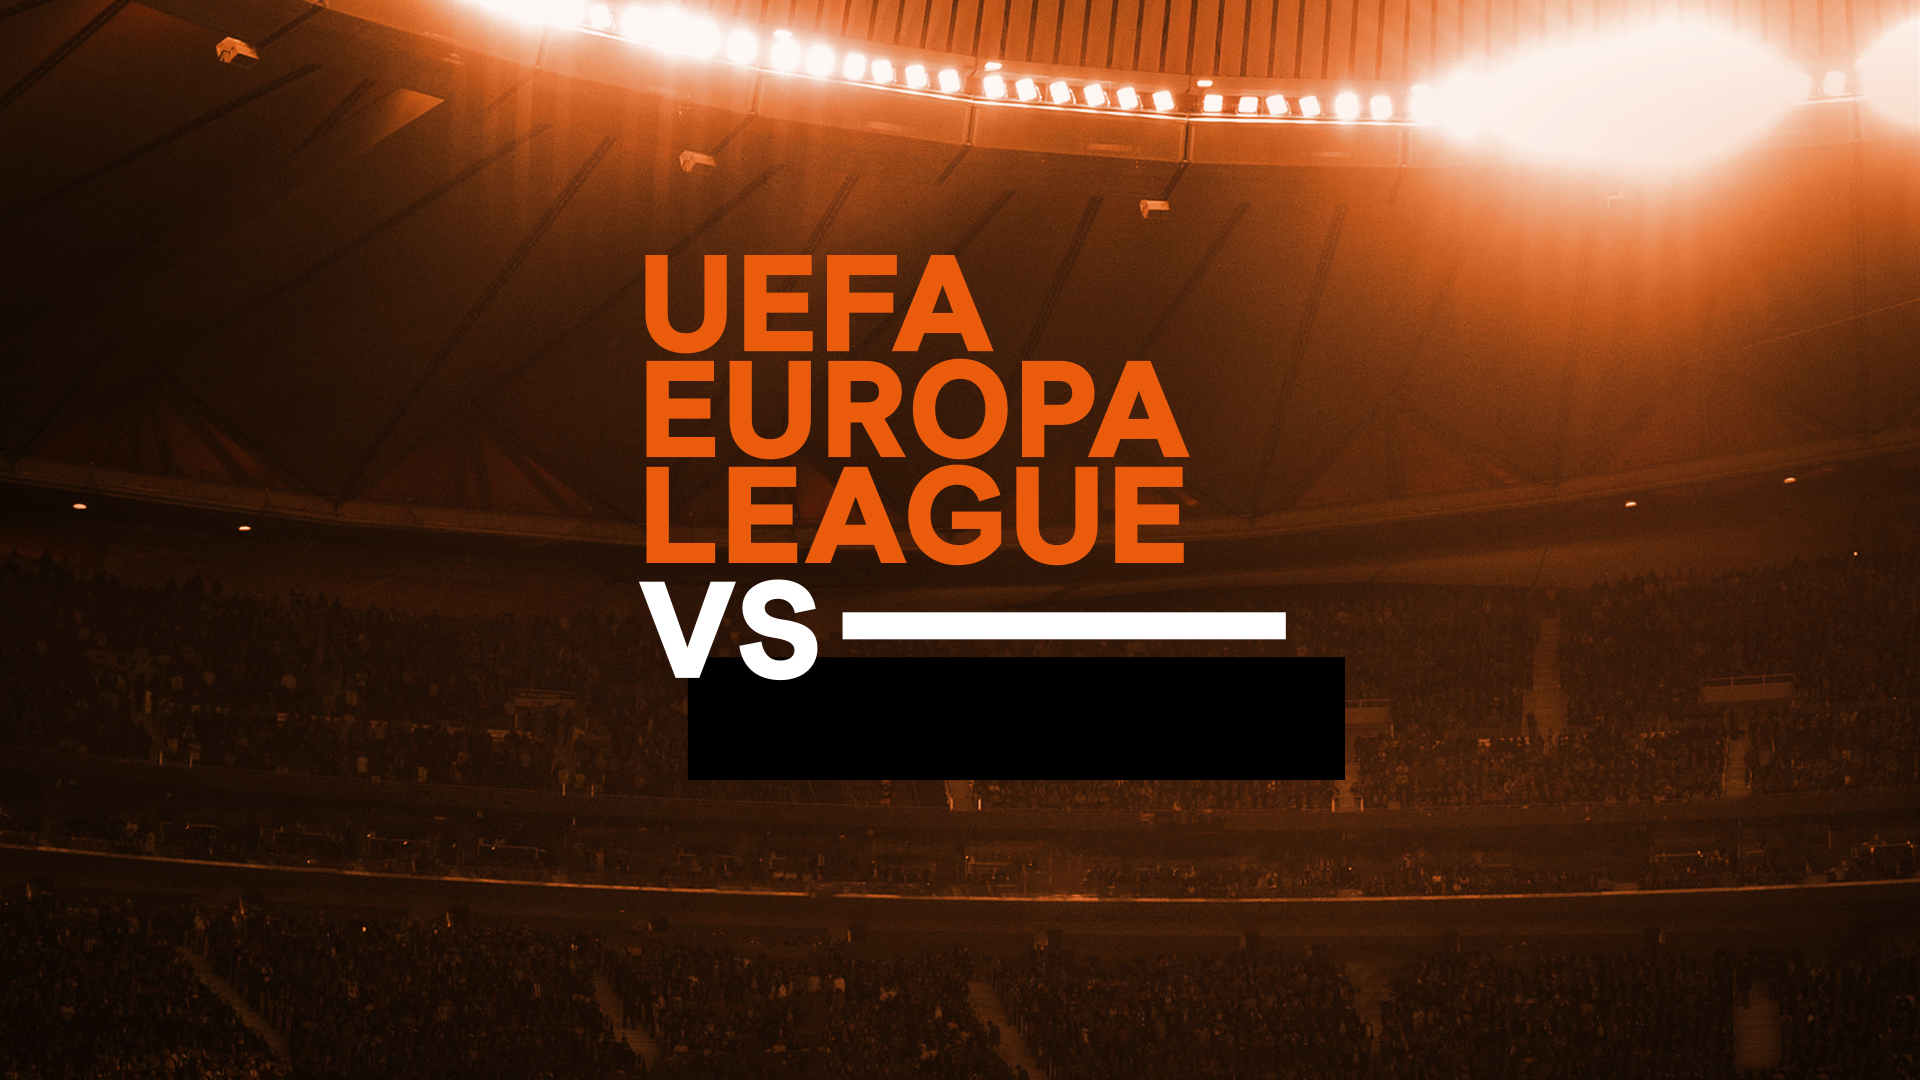 UEFA - Europa League vs. Haters